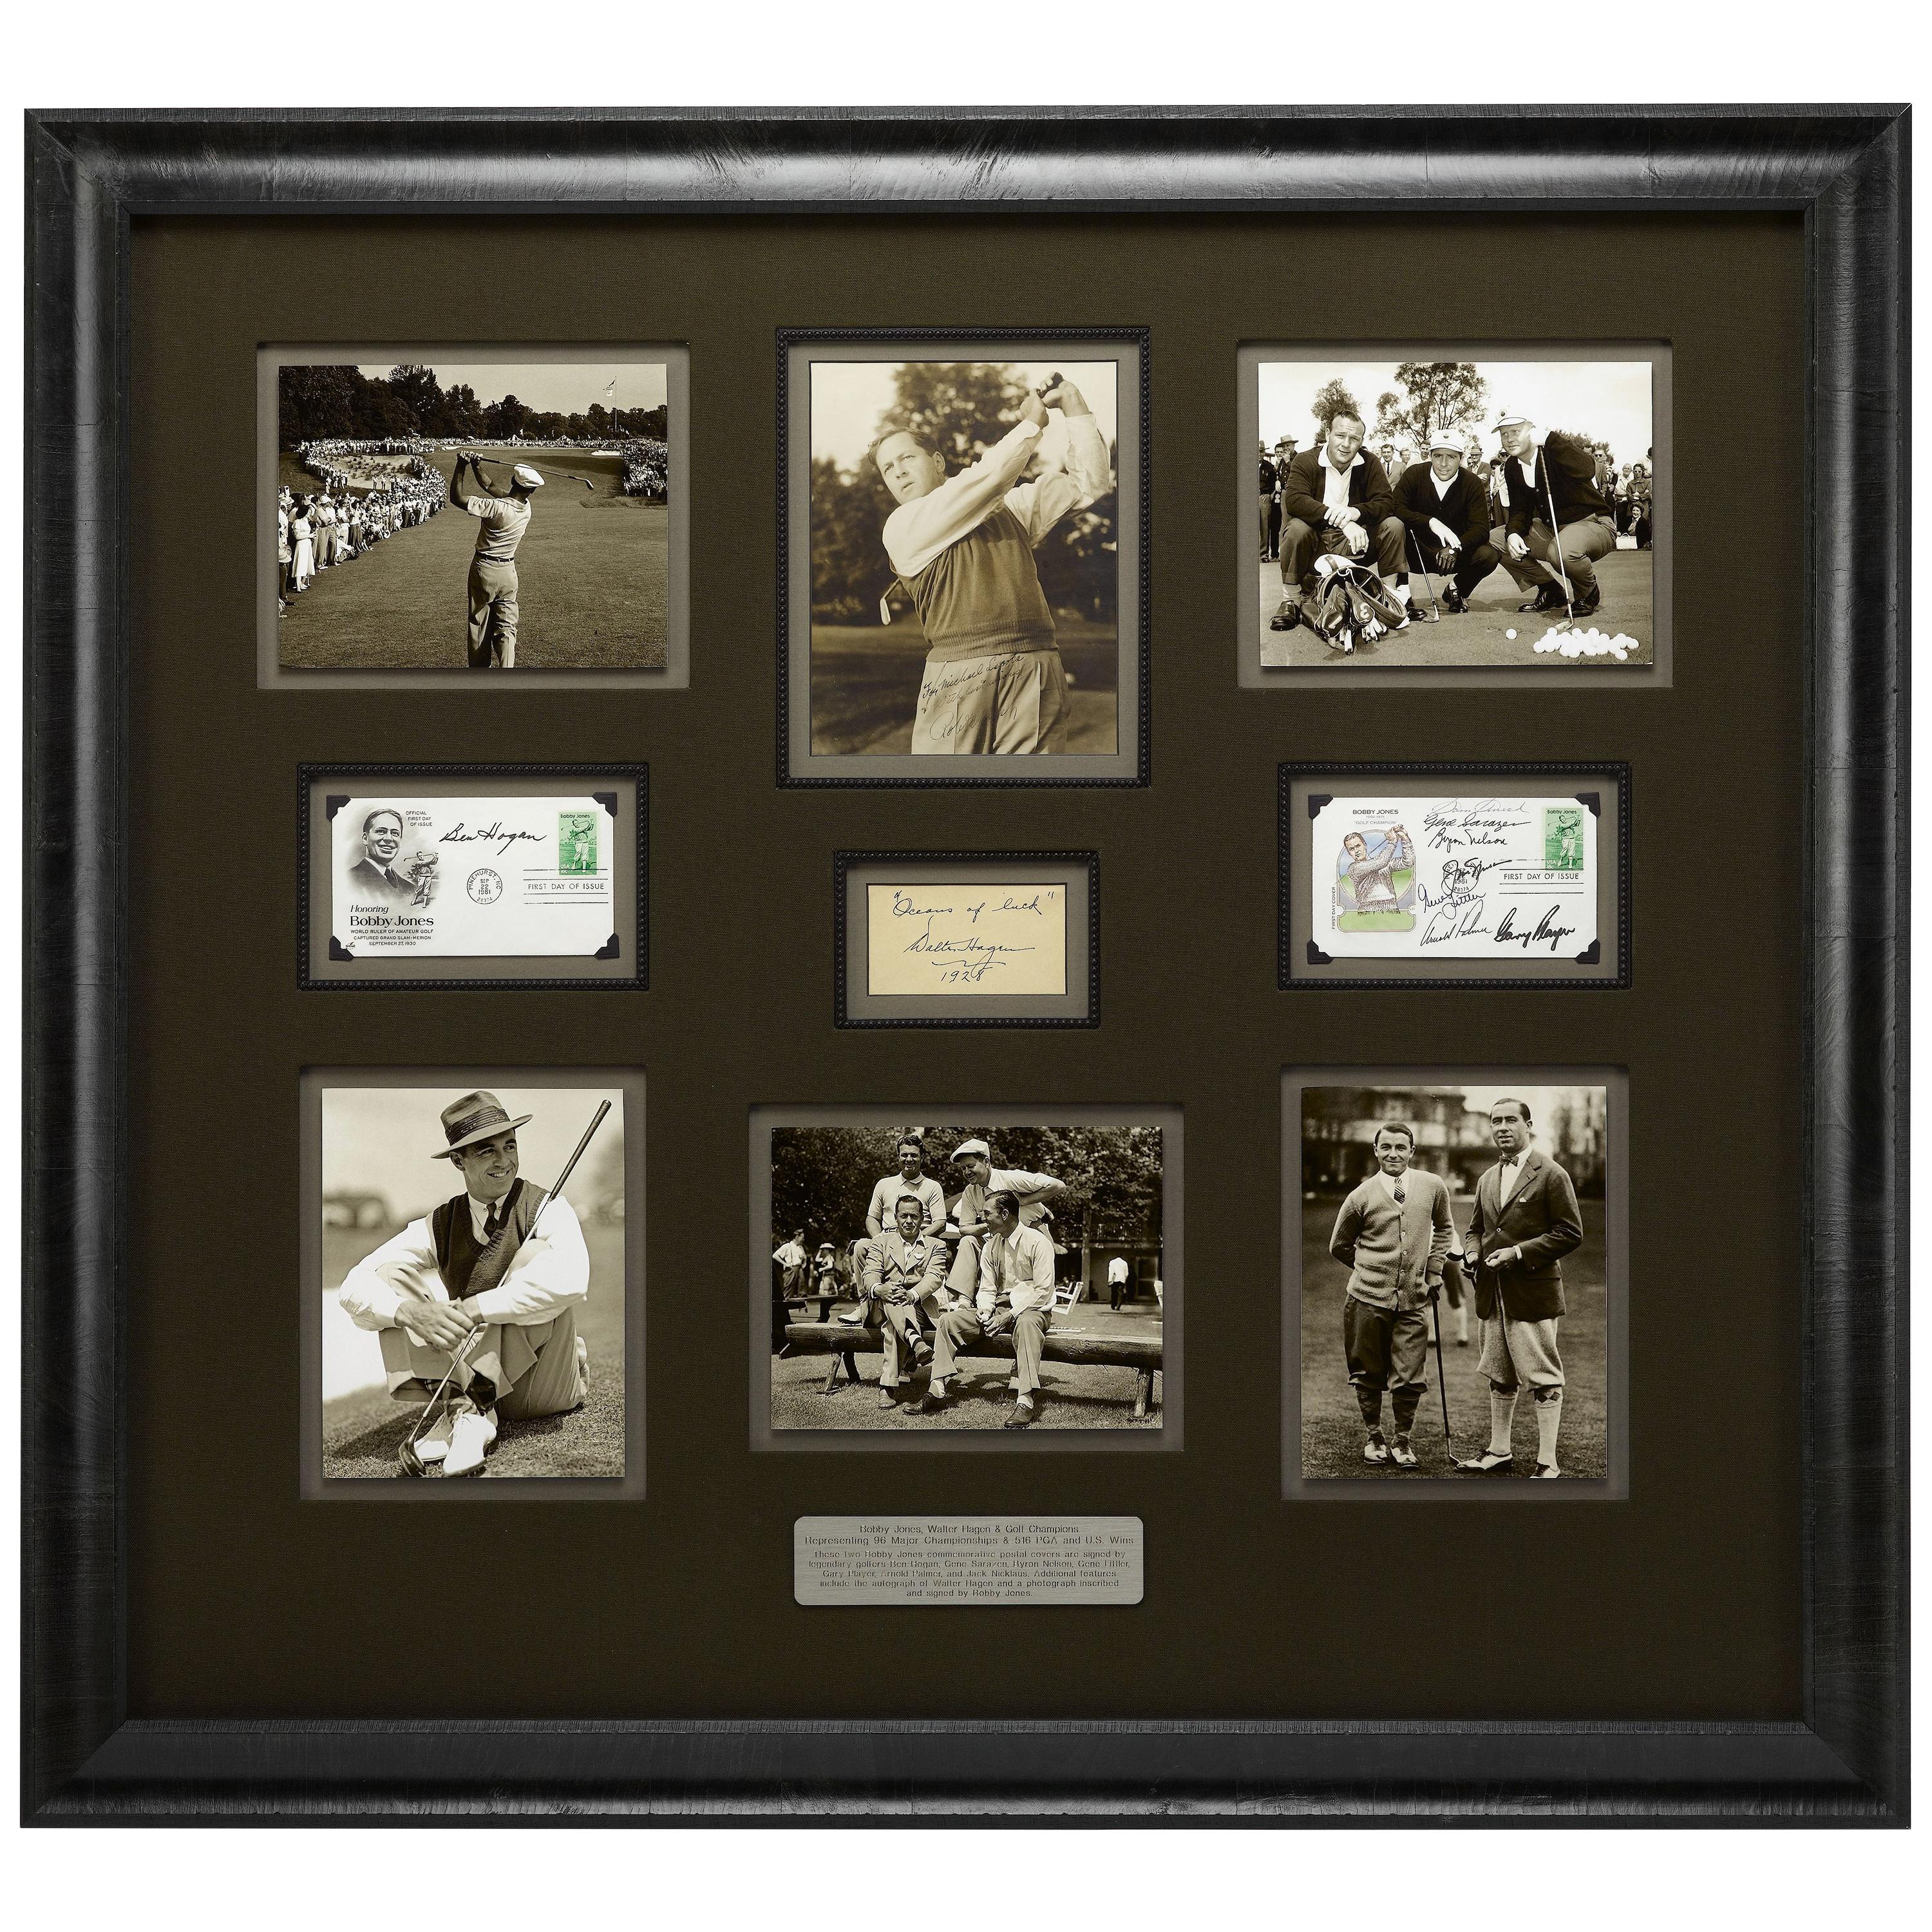 Bobby Jones, Walter Hagen, and Golf's Greatest Legends Signature Collage